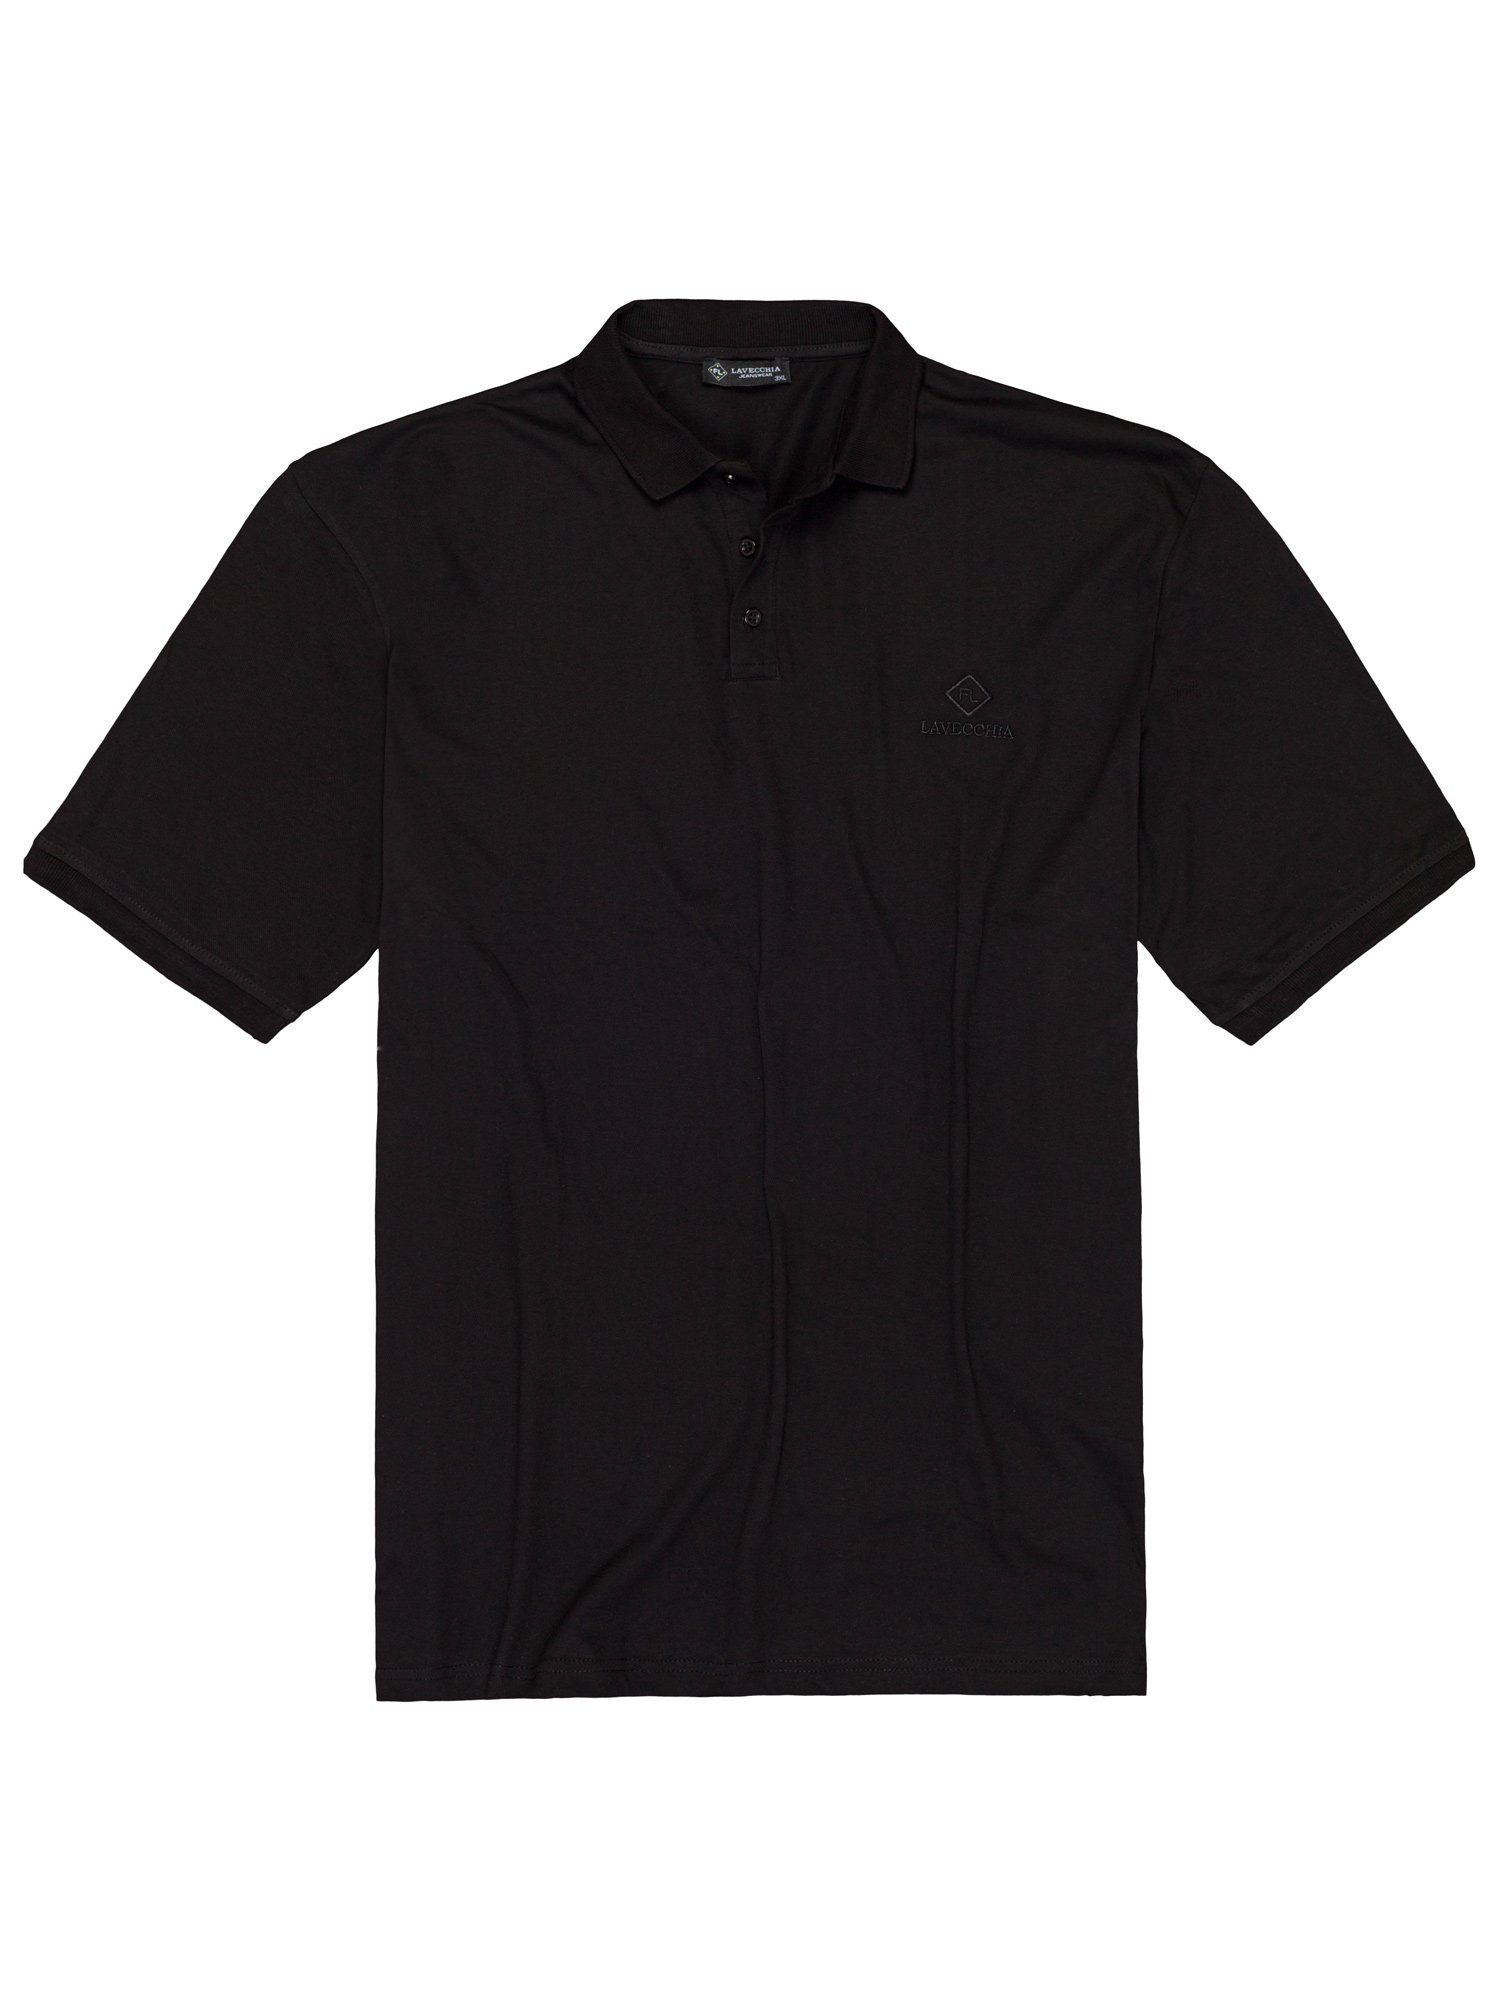 Poloshirt LV-1000 Übergrößen schwarz Lavecchia Herren Shirt Polo